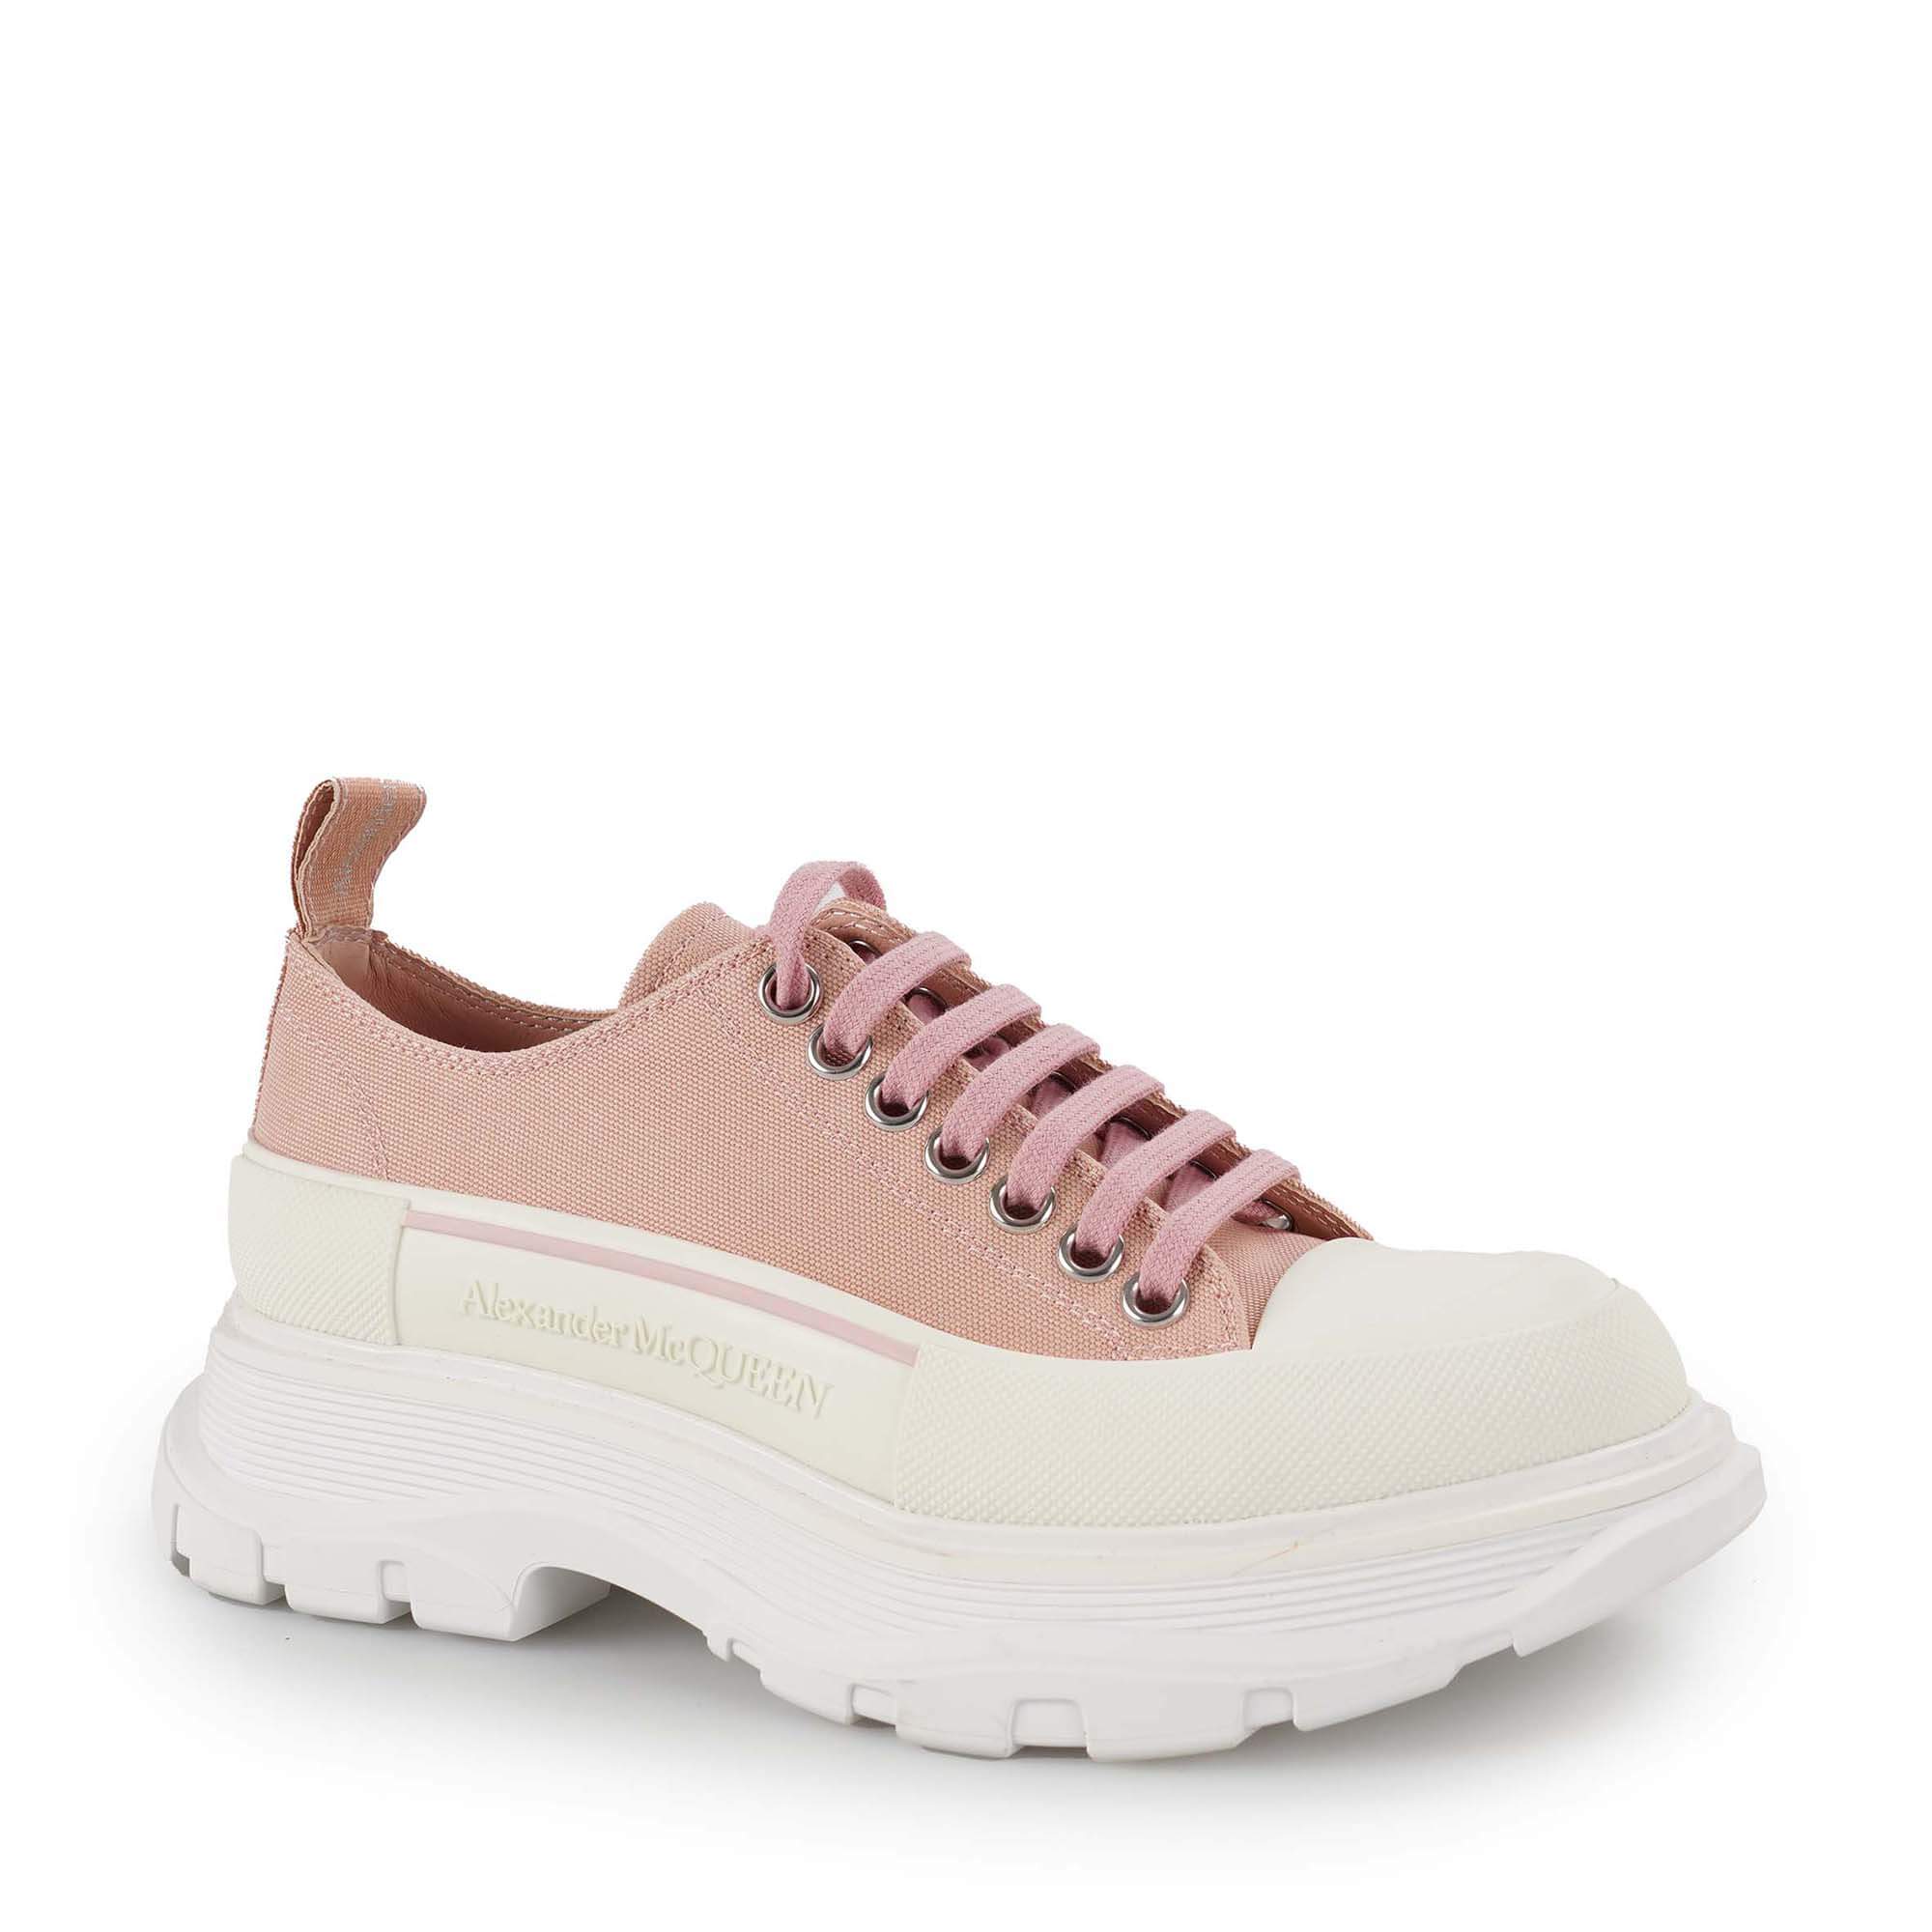 Alexander McQueen - Pink and White Tread Slick Low Top Sneakers